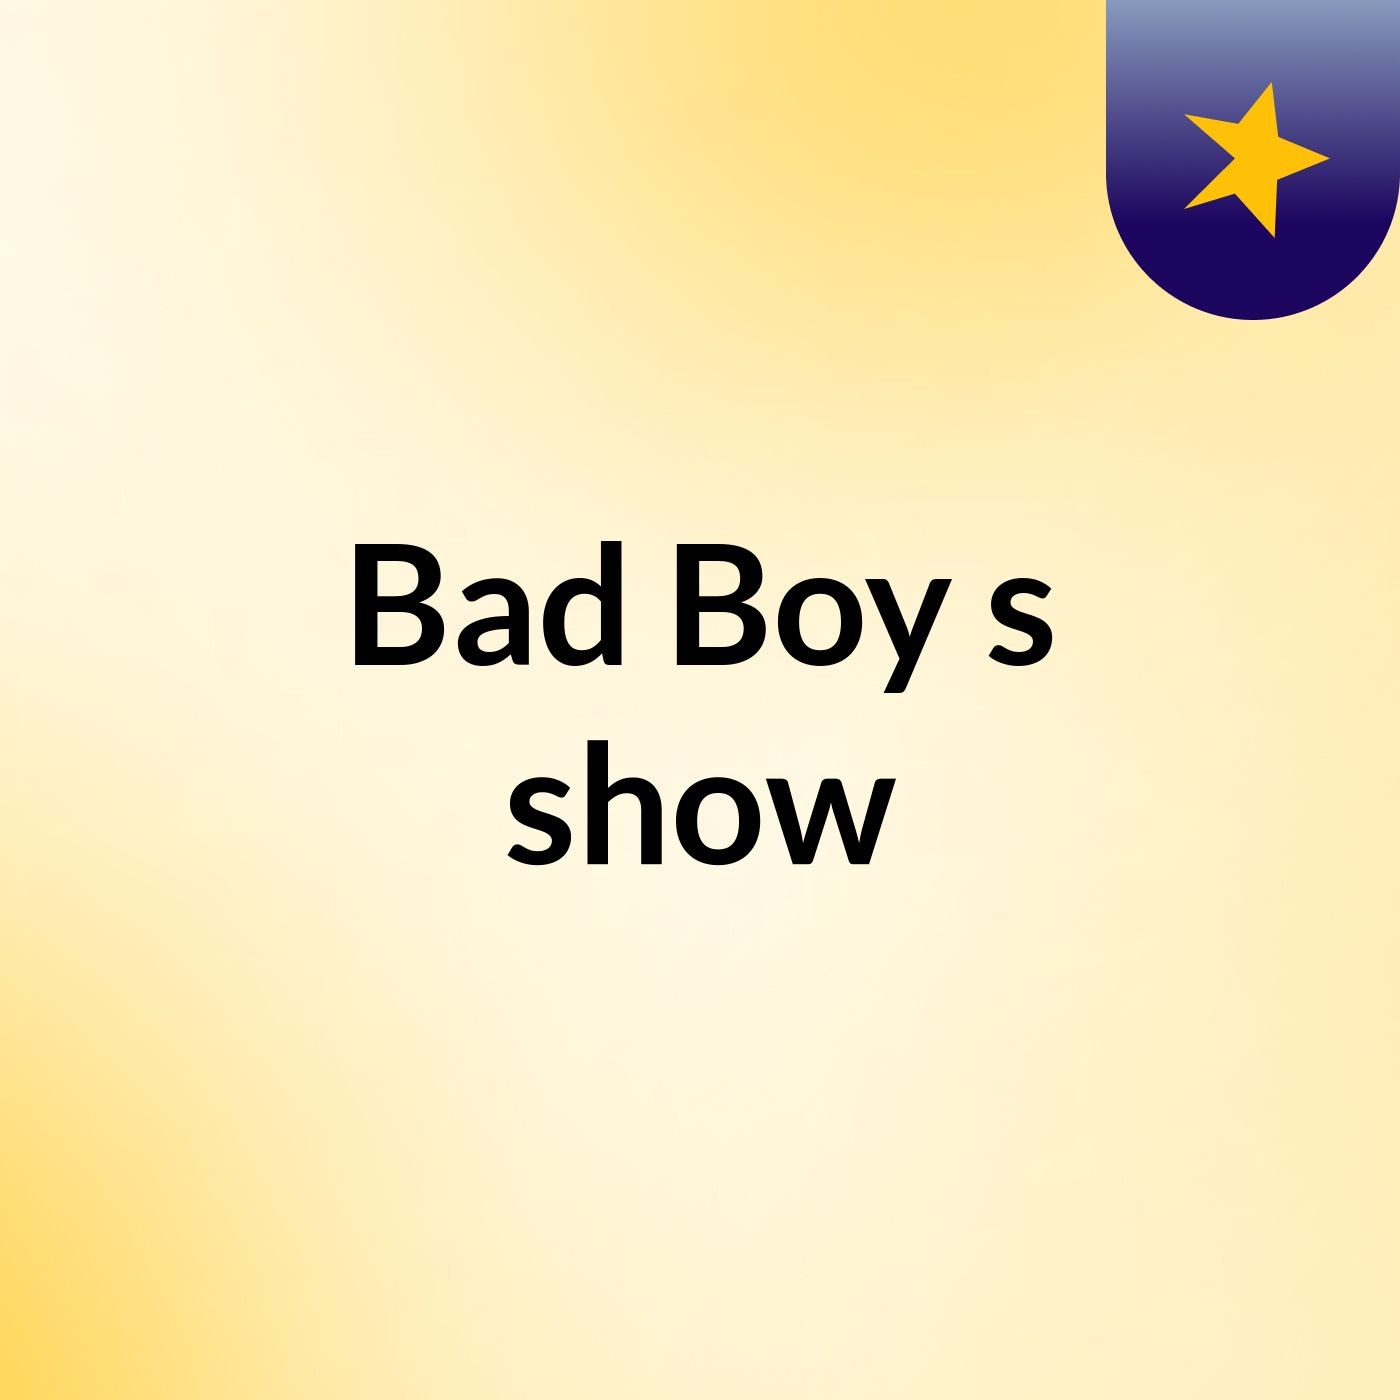 Bad Boy's show